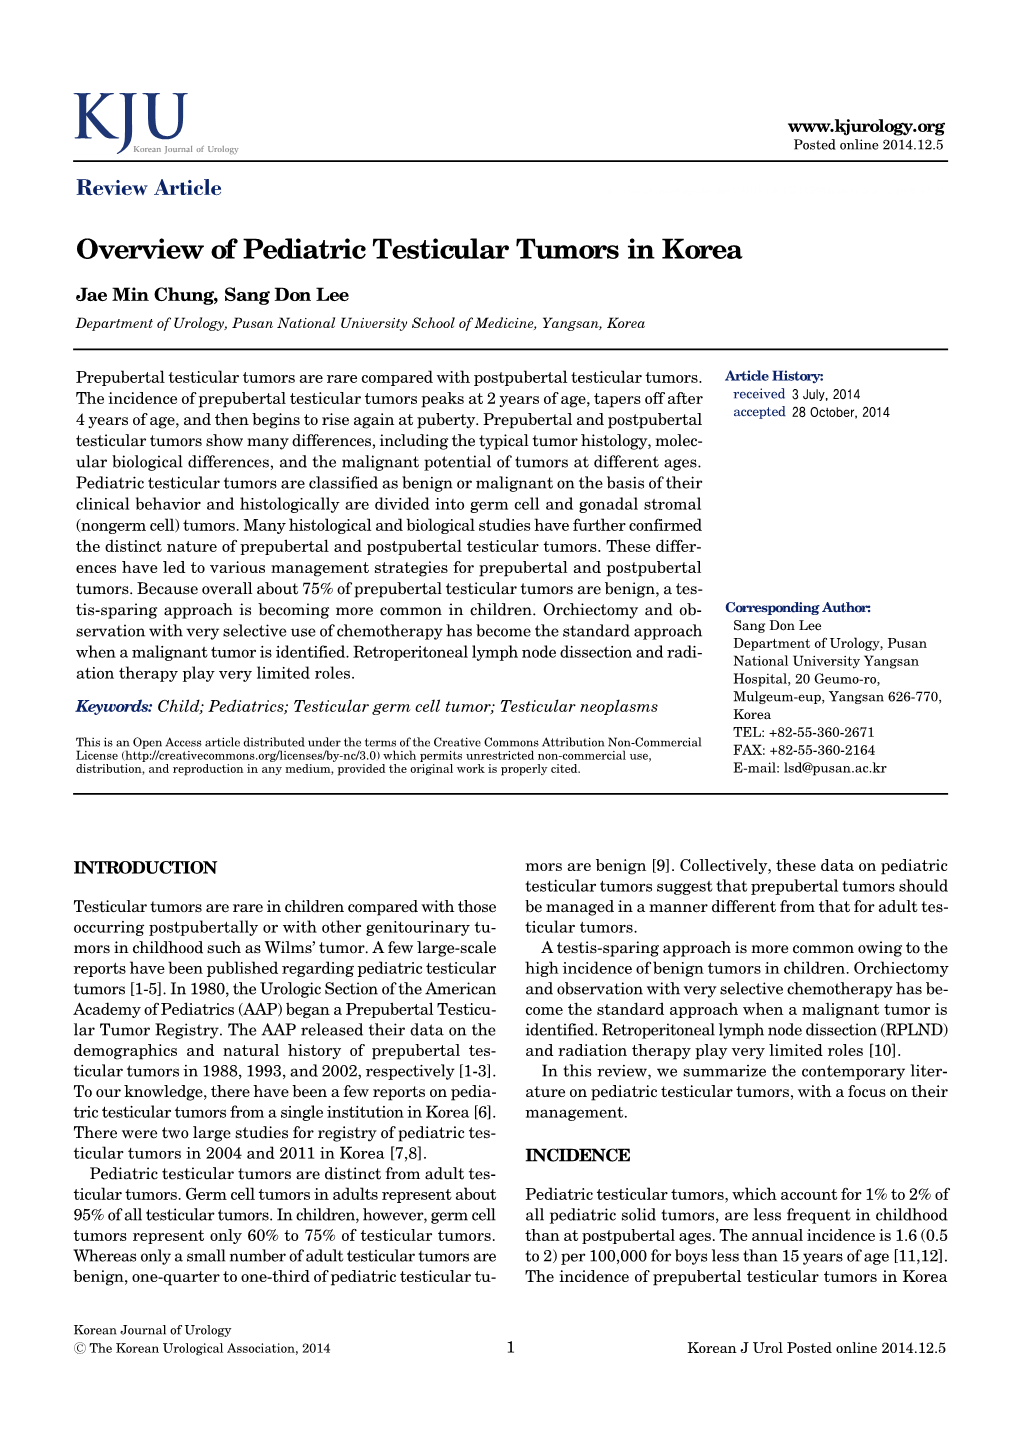 Overview of Pediatric Testicular Tumors in Korea